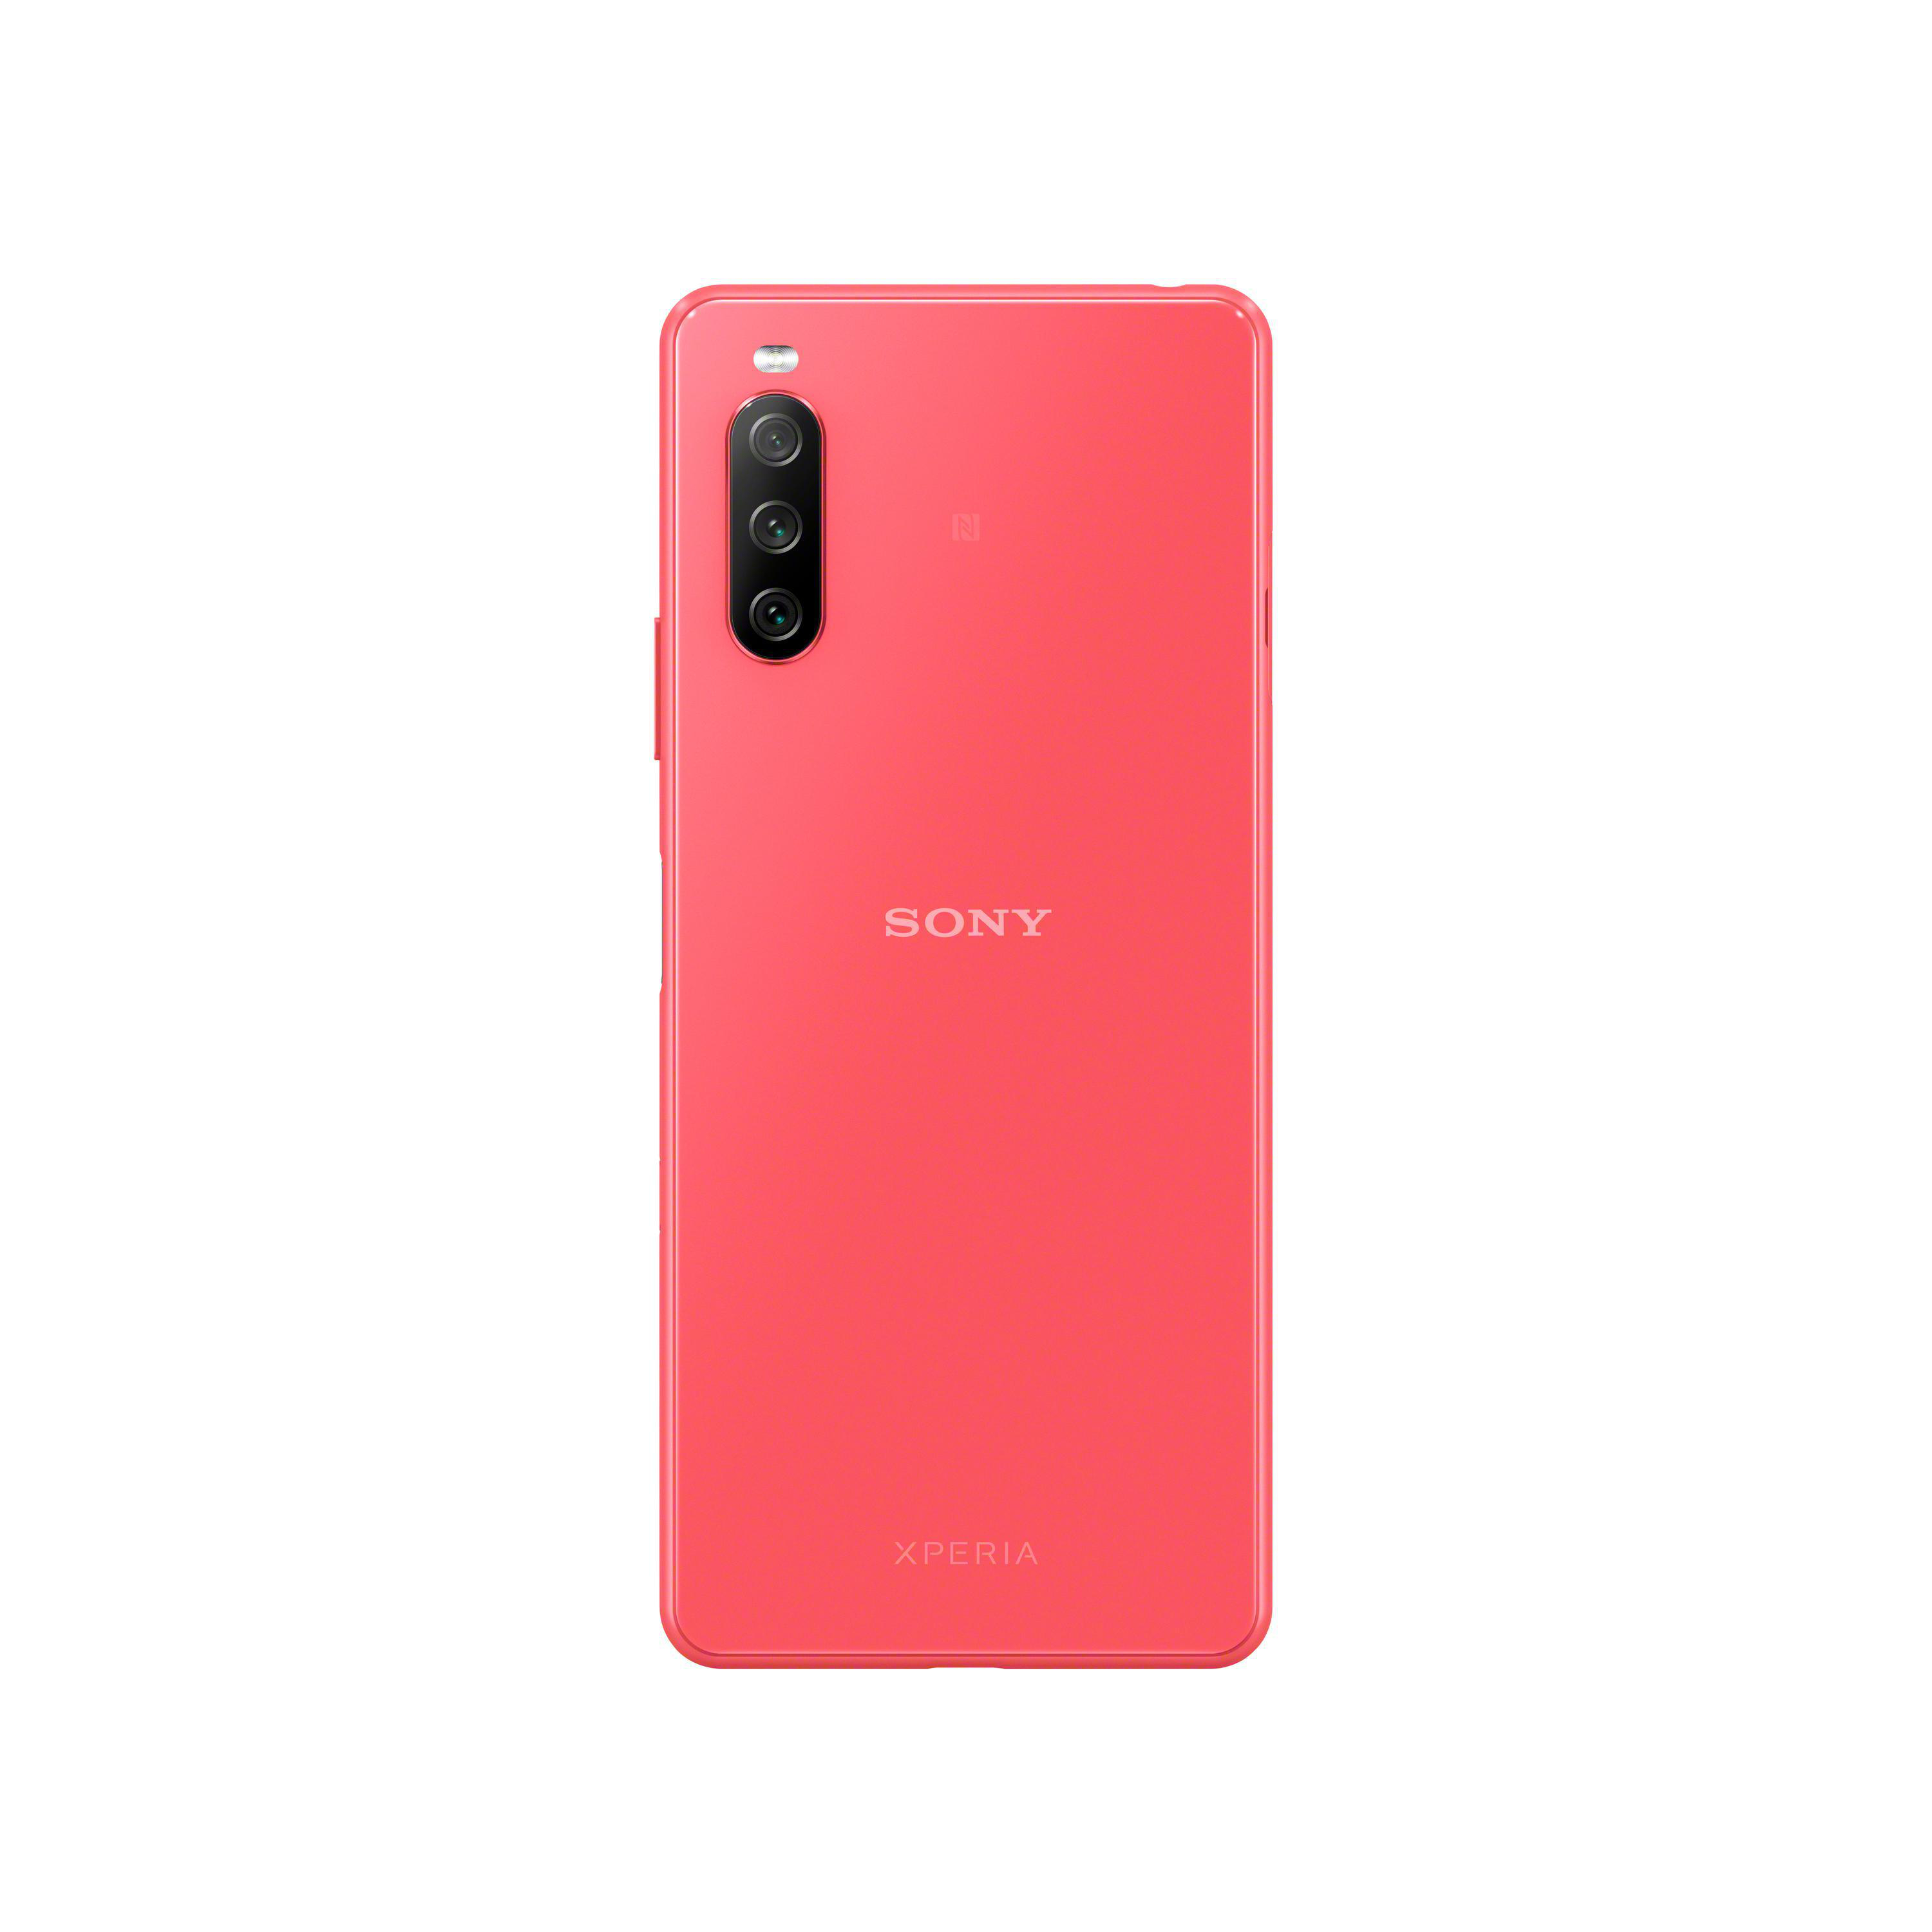 Display Pink 21:9 GB SIM III Xperia SONY 10 Dual 5G 128